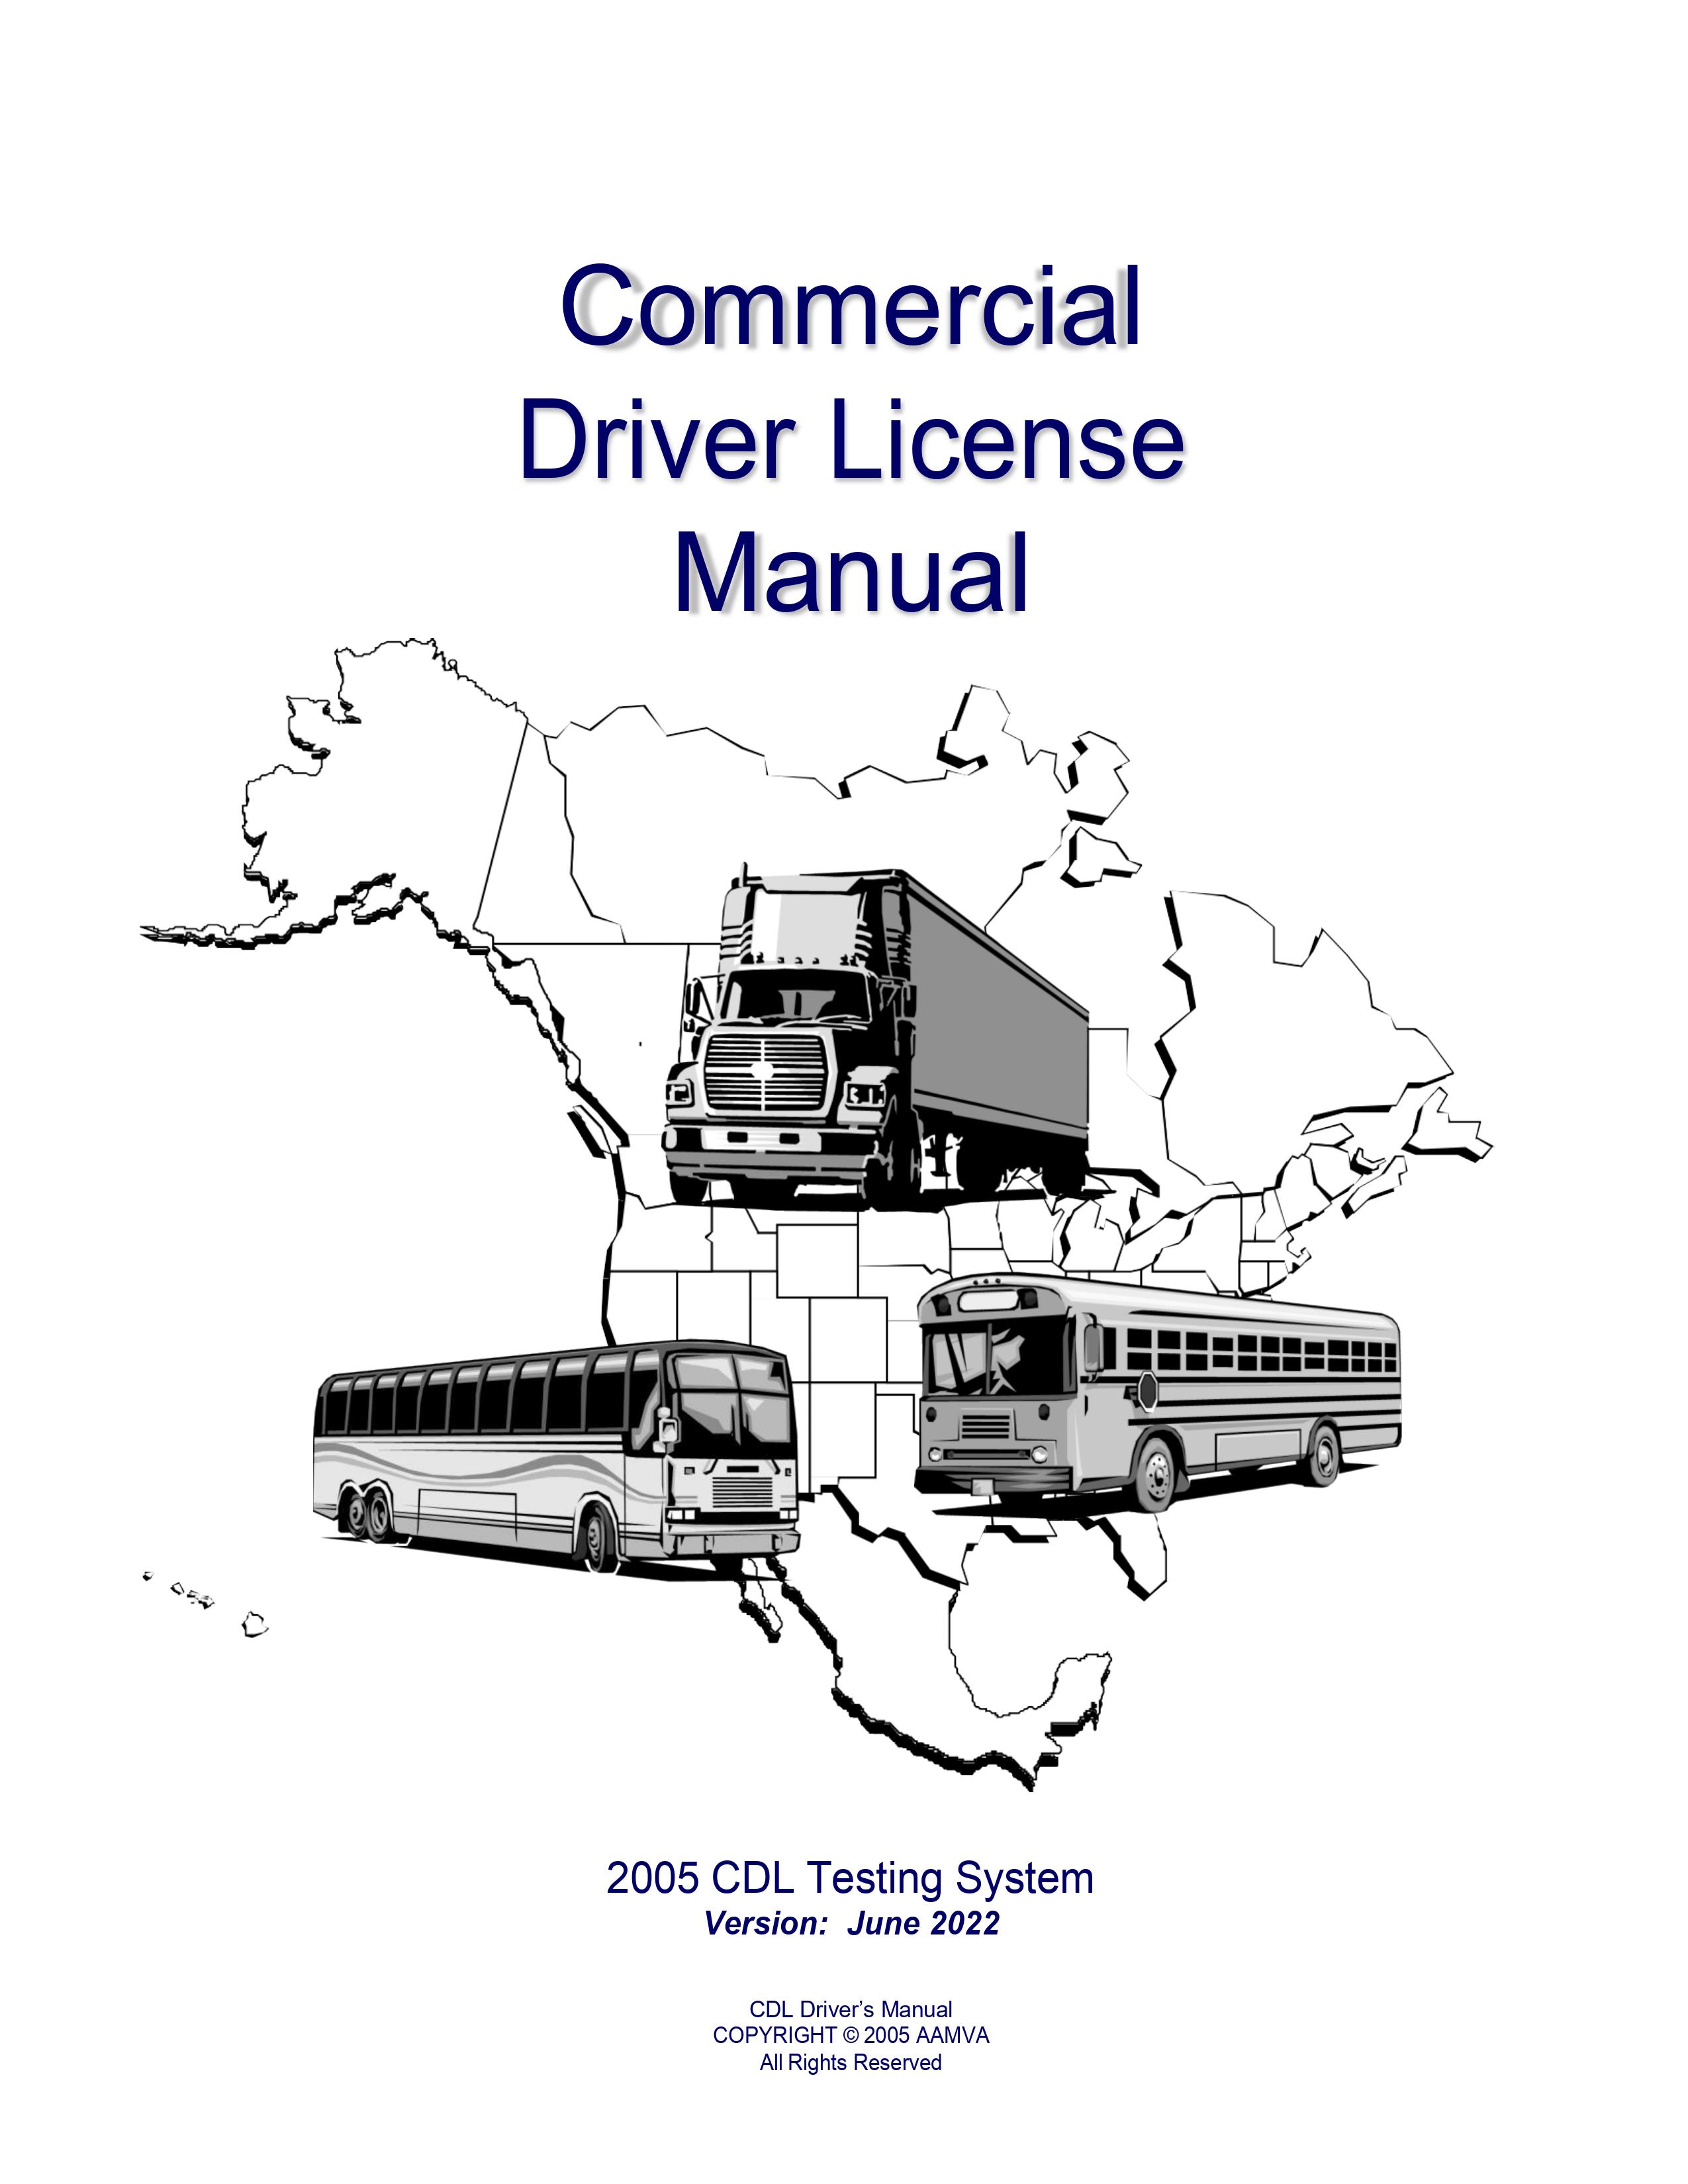 Louisiana's CDL Manual